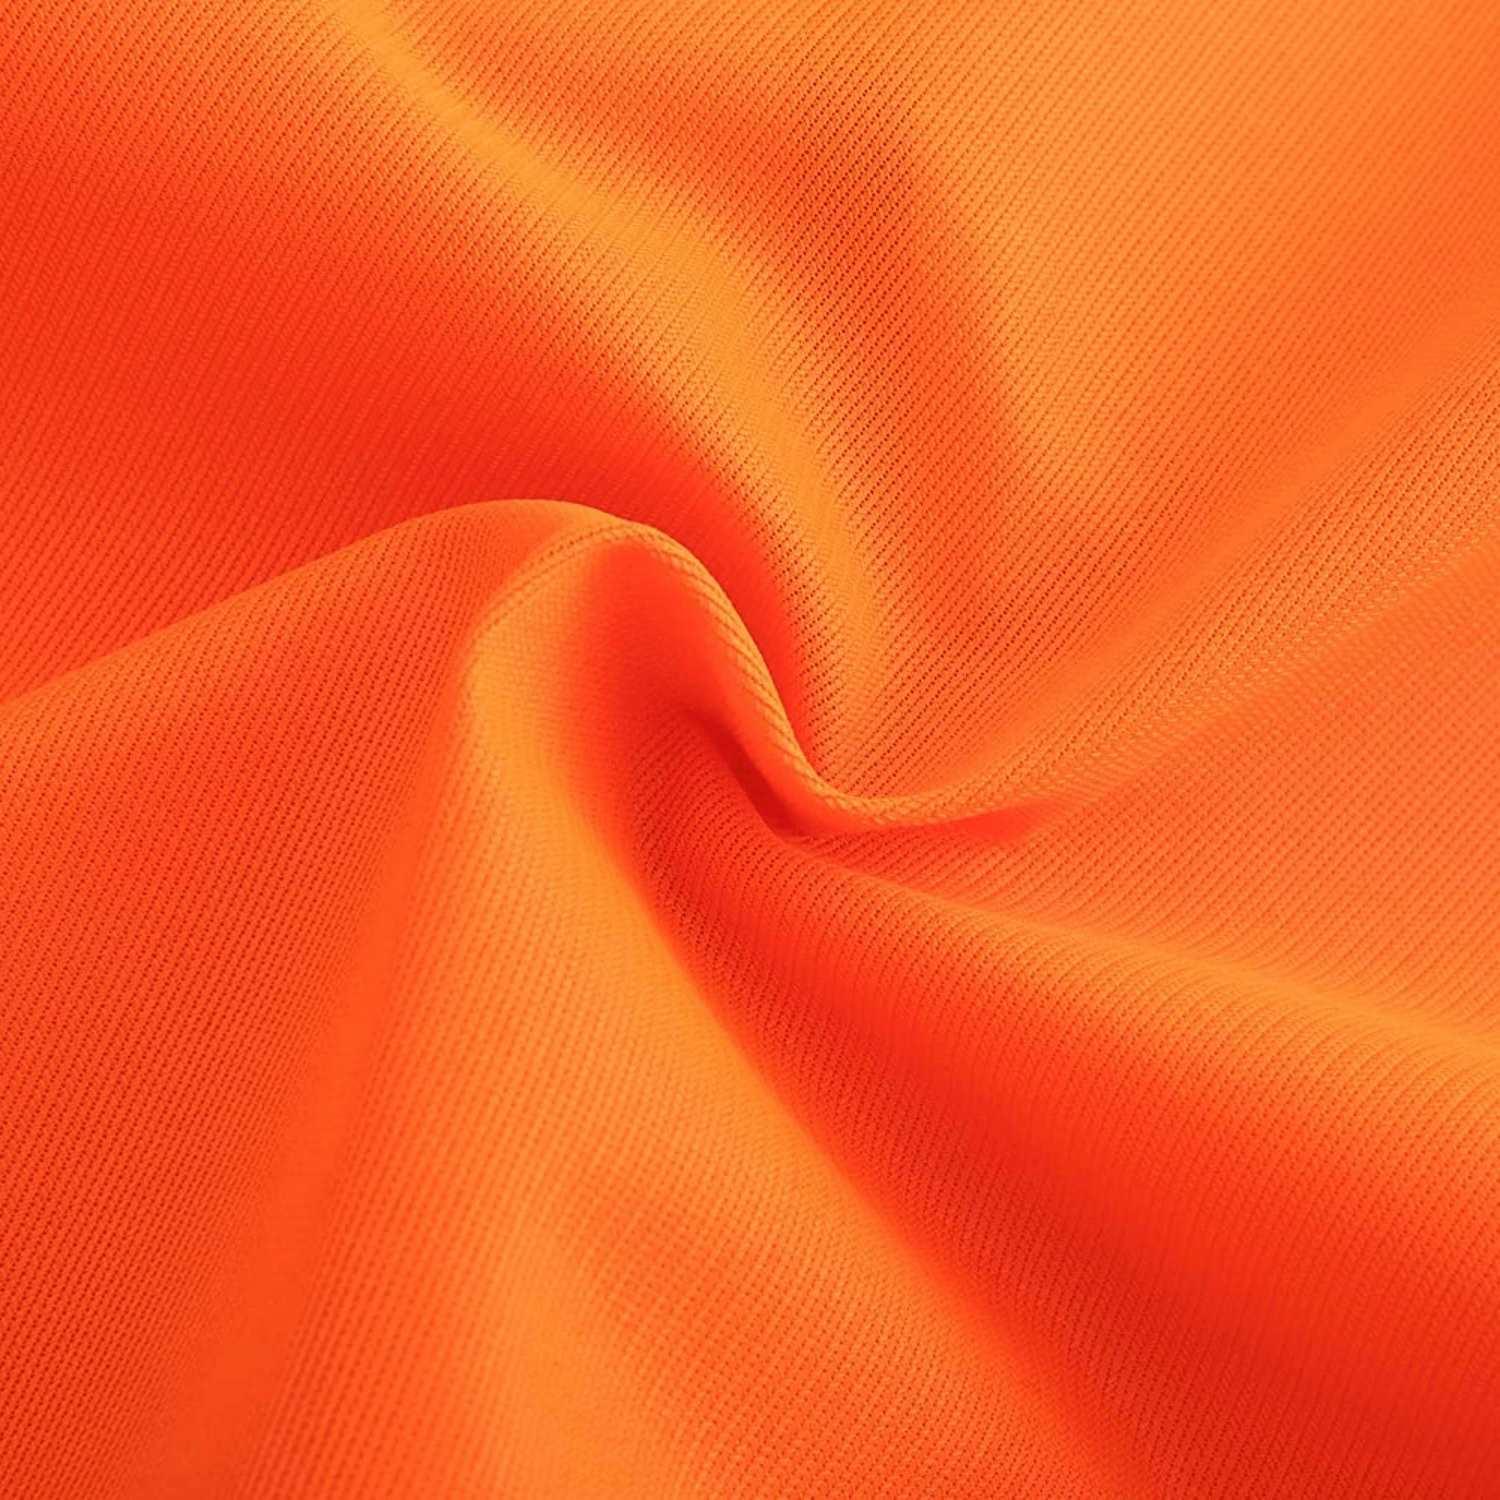 Buy Orange Safety Reflective Jackets with Velcro Closure Online – Robustt